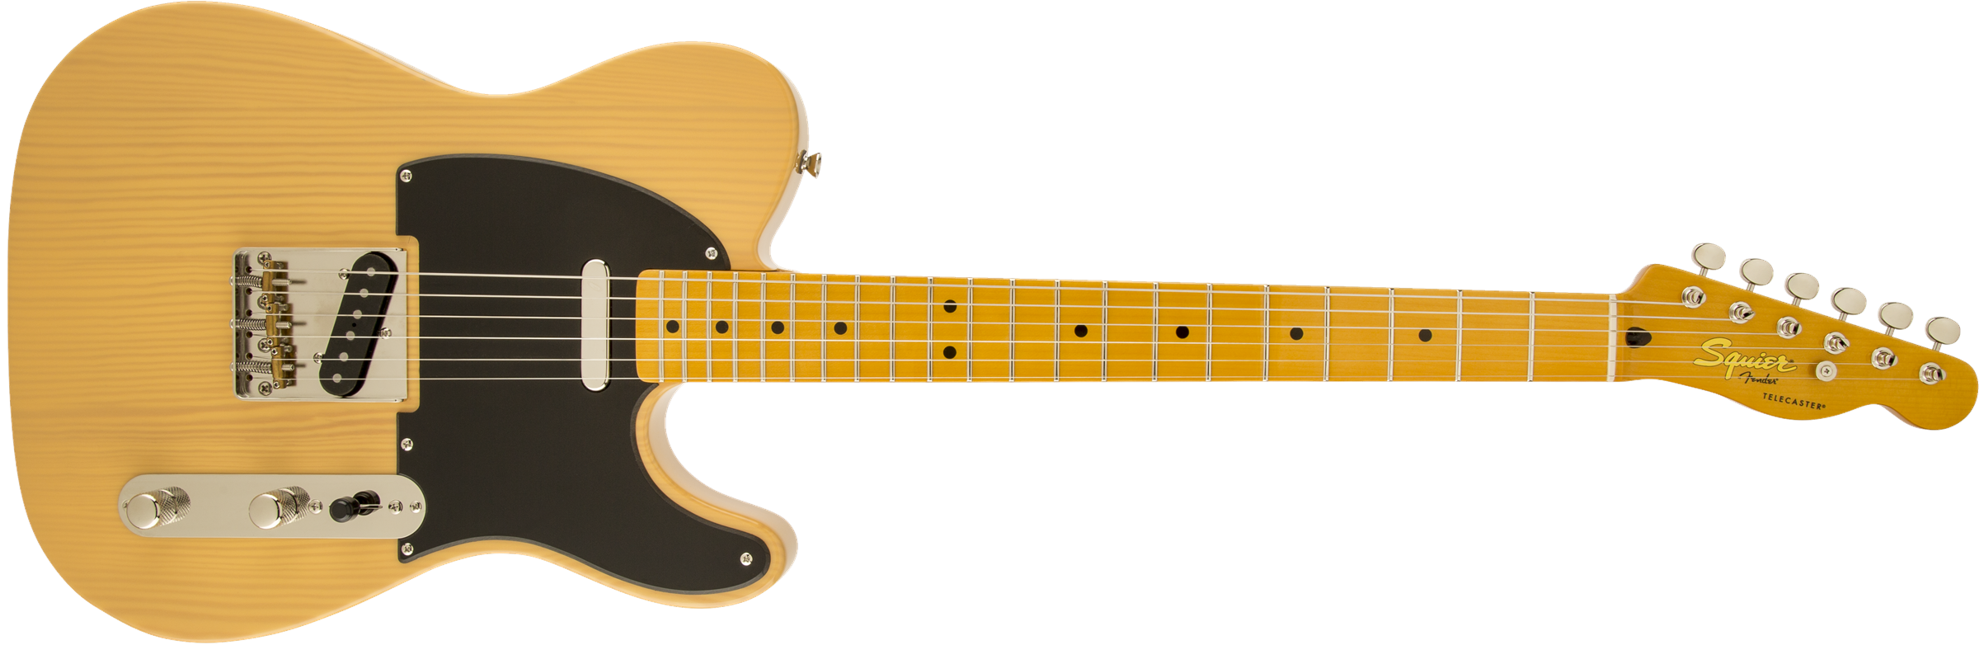 Squier By Fender - Classic Vibe 50's Telecaster - Elektrisk Guitar (Butterscotch Blonde)